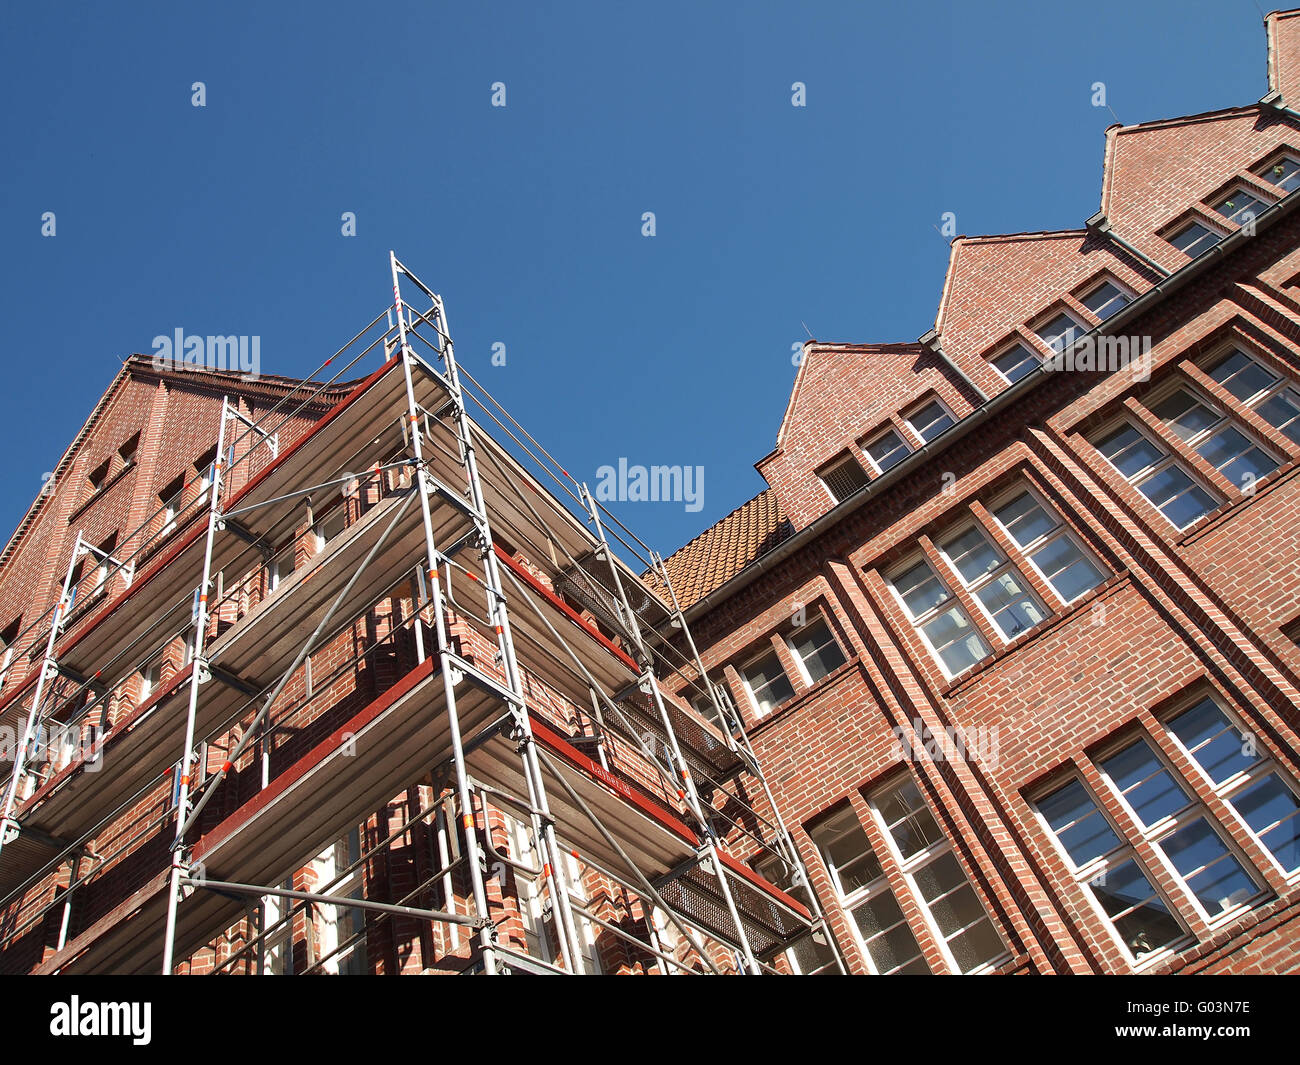 clinker facade with scaffolding Stock Photo